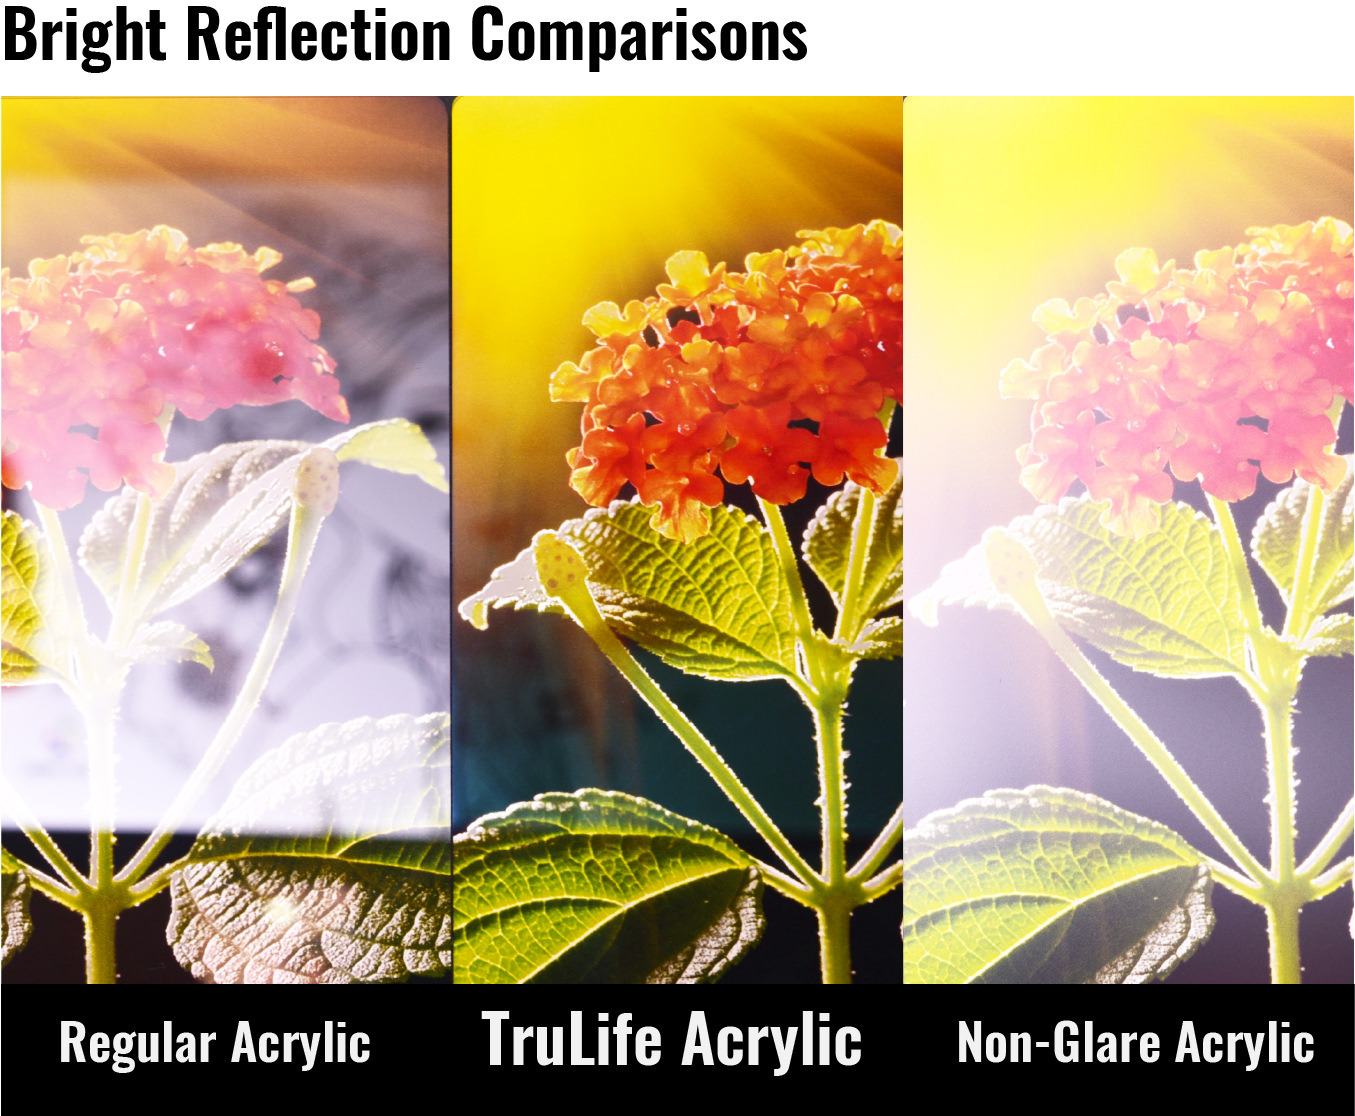 Bright Reflection Comparisons